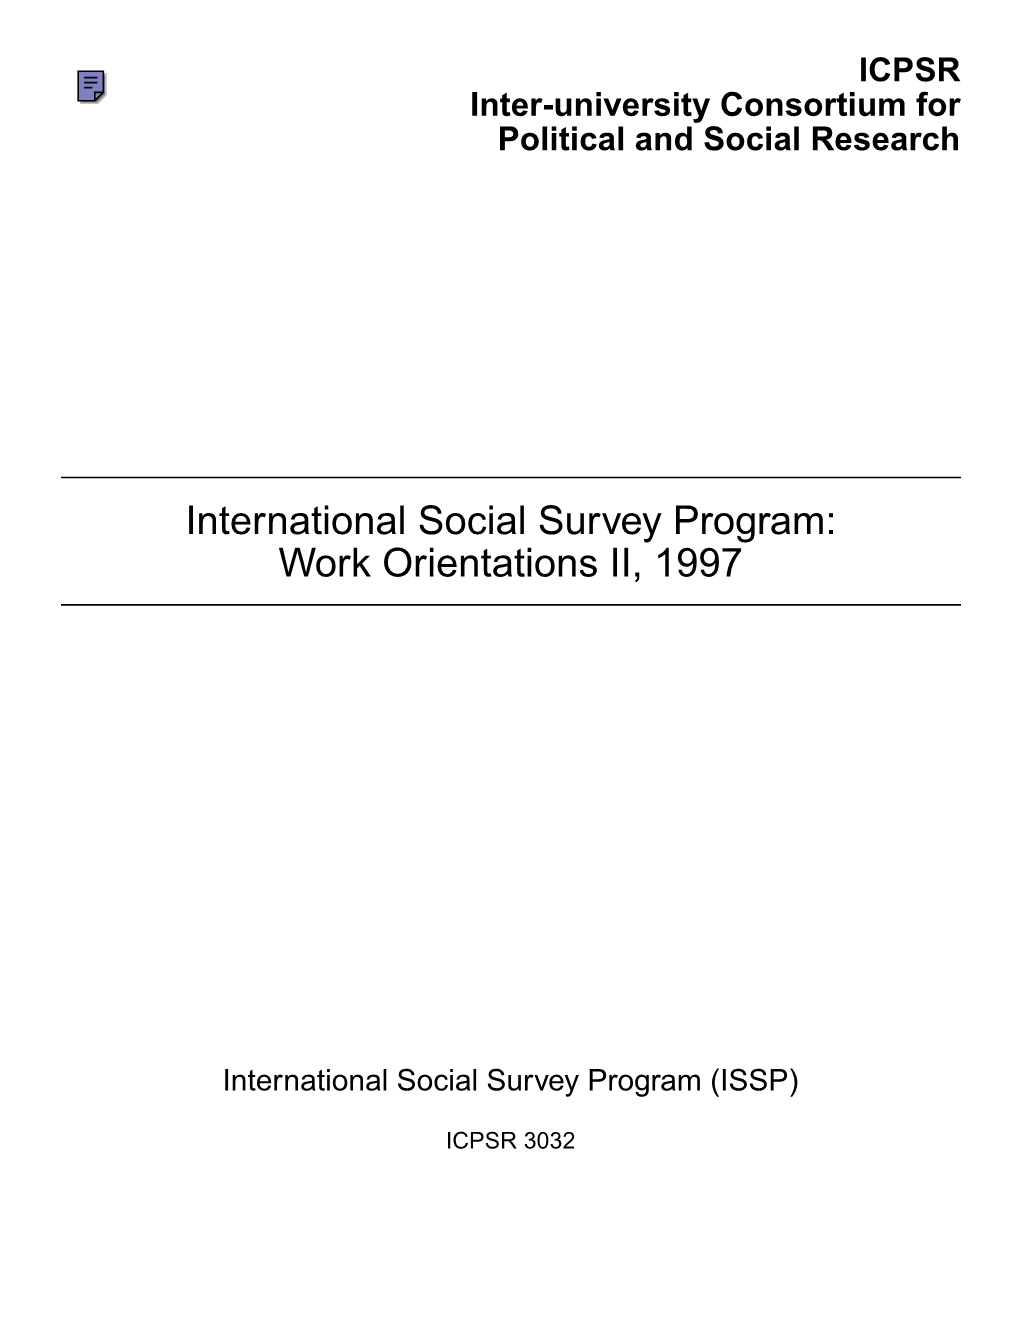 International Social Survey Program: Work Orientations II, 1997